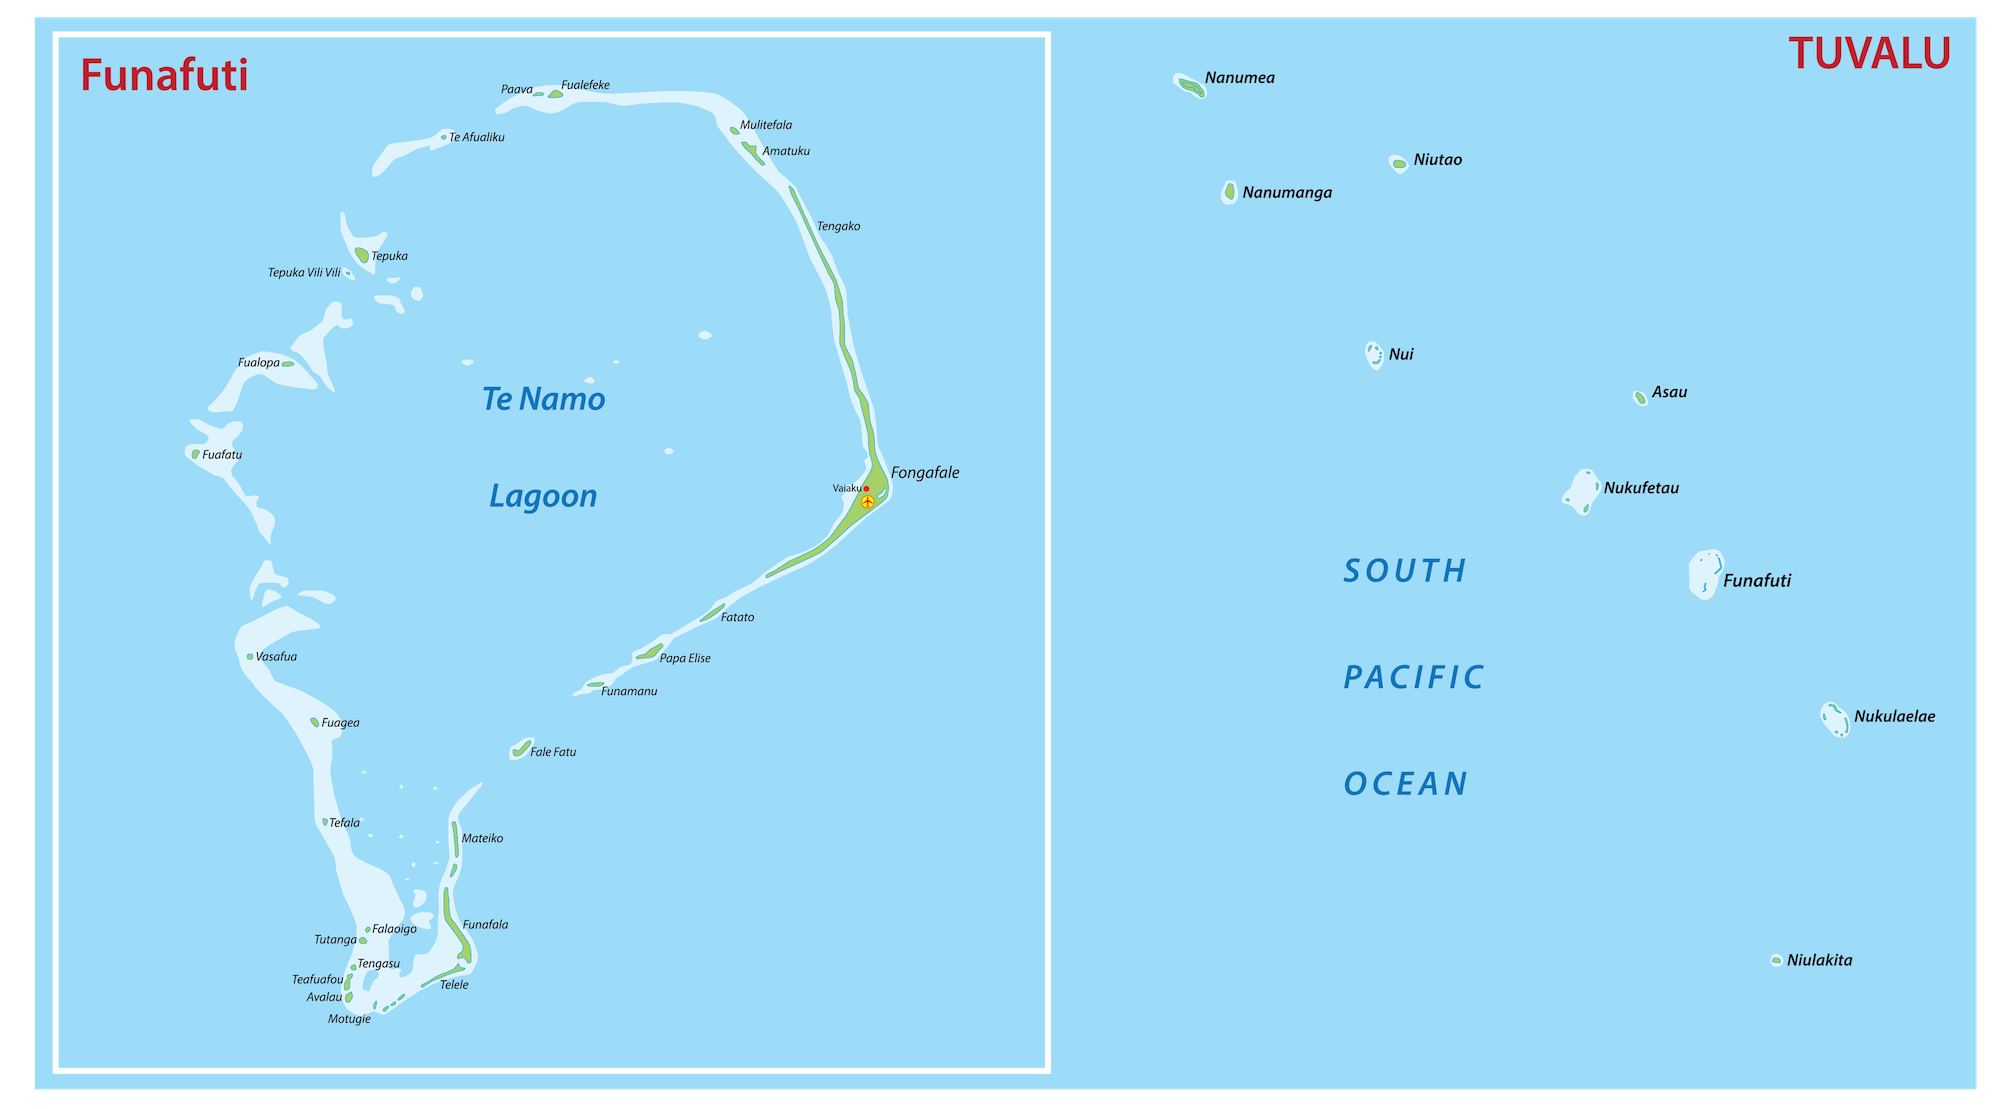 islands map of tuvalu and funafuti